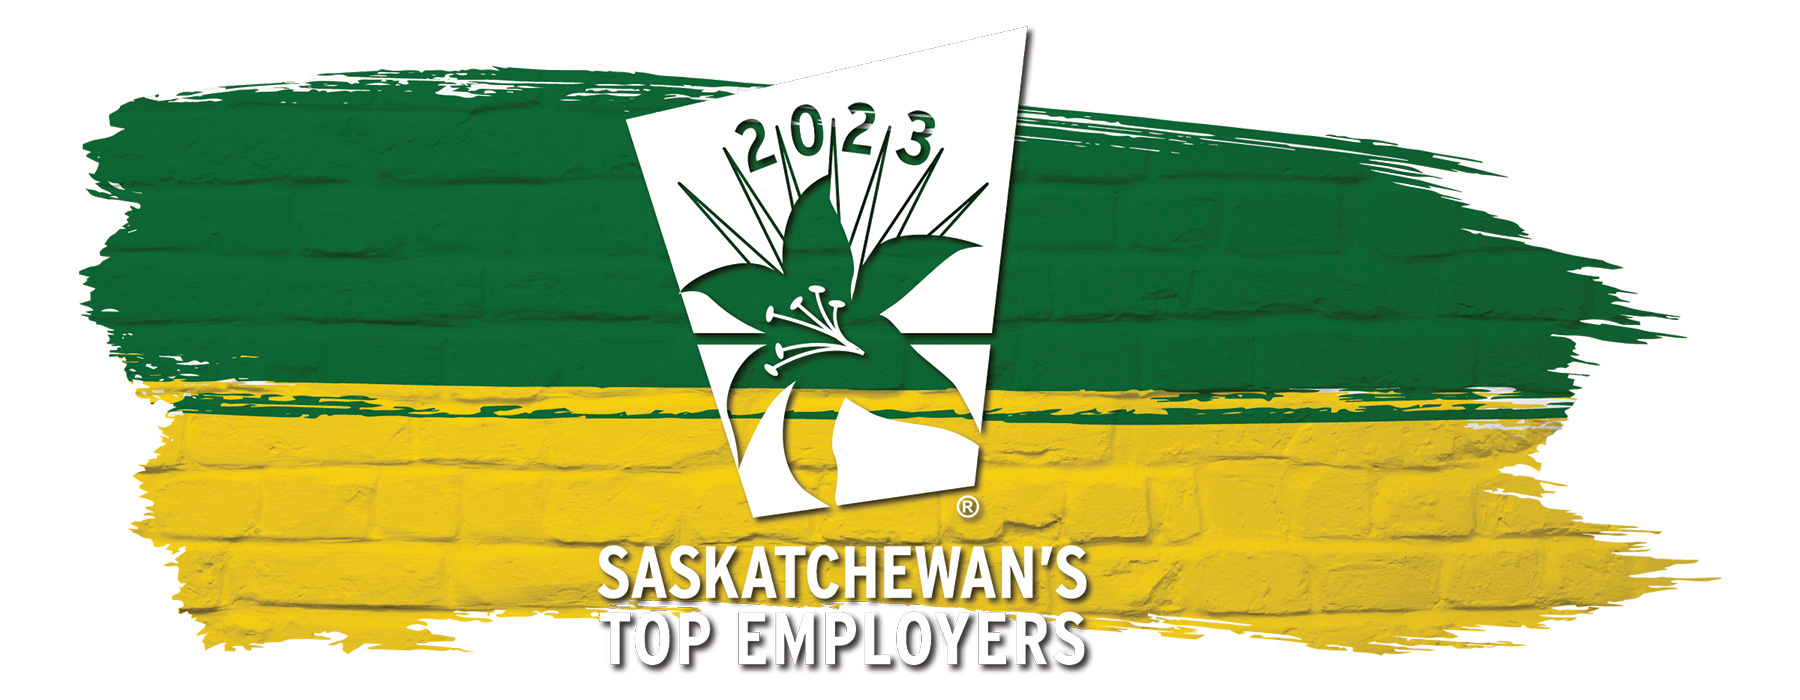 3sHealth once again among Saskatchewan’s Top Employers